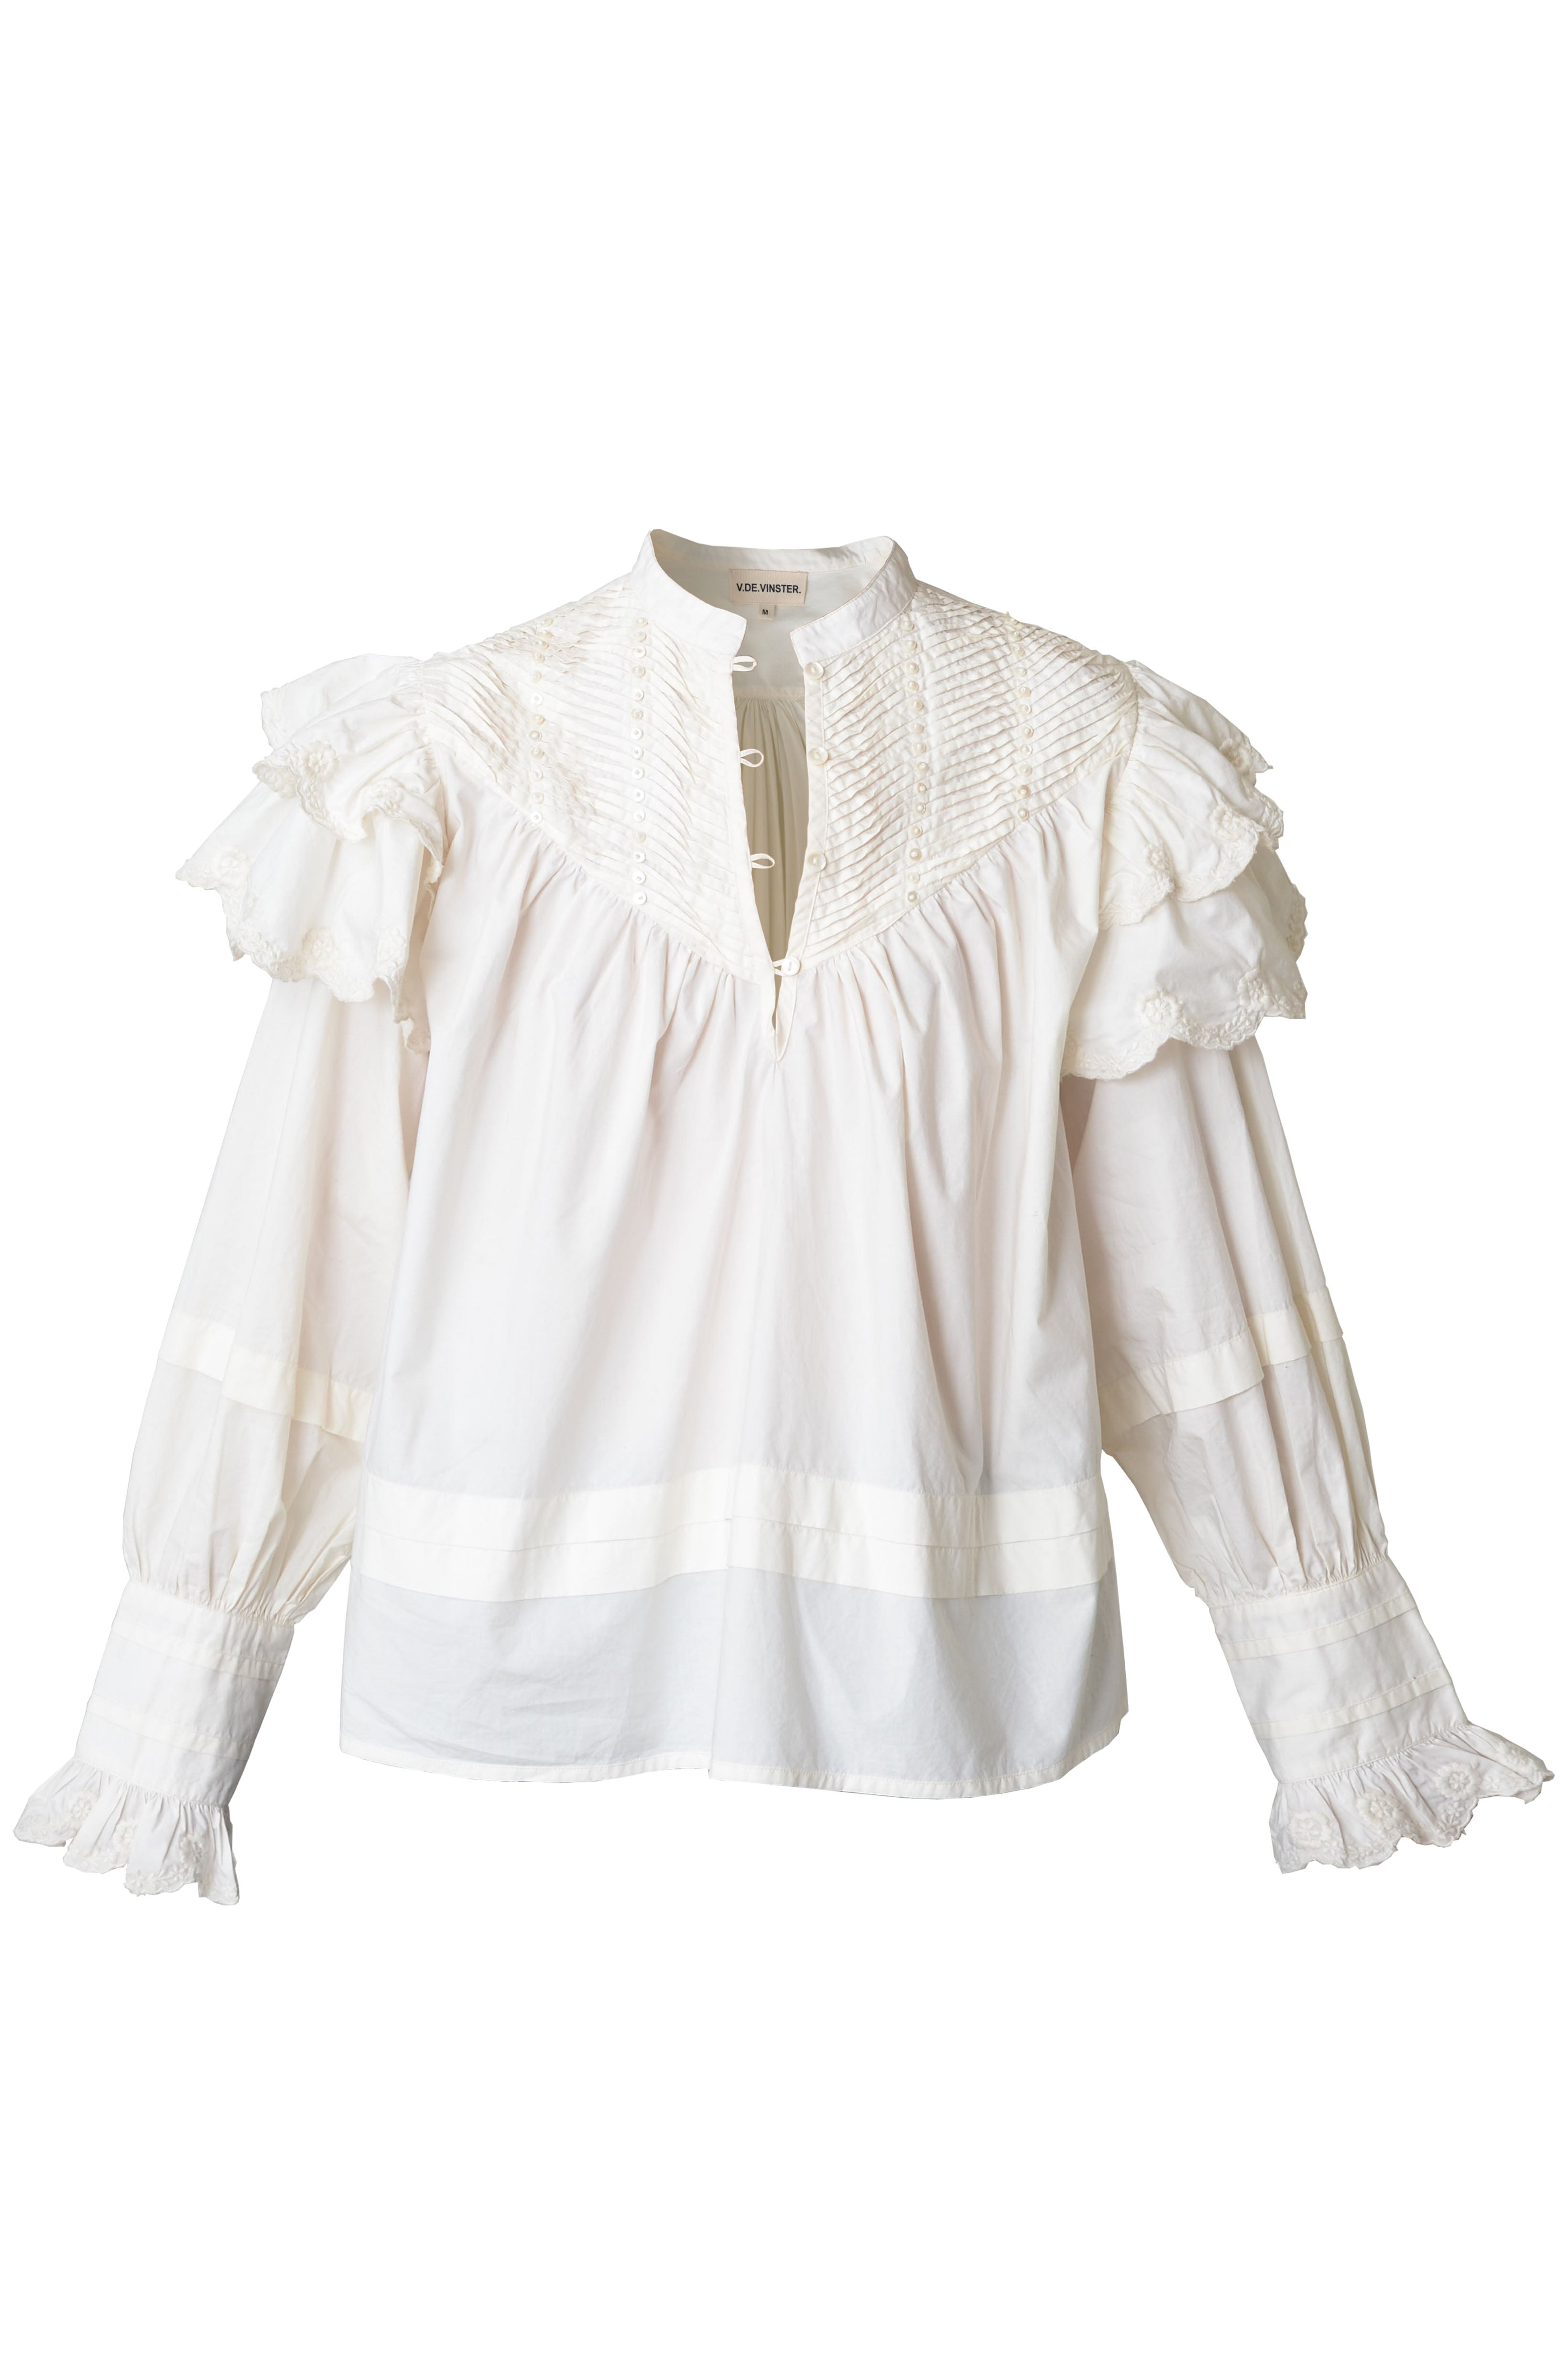 Chloé bohemian white ruffled blouse